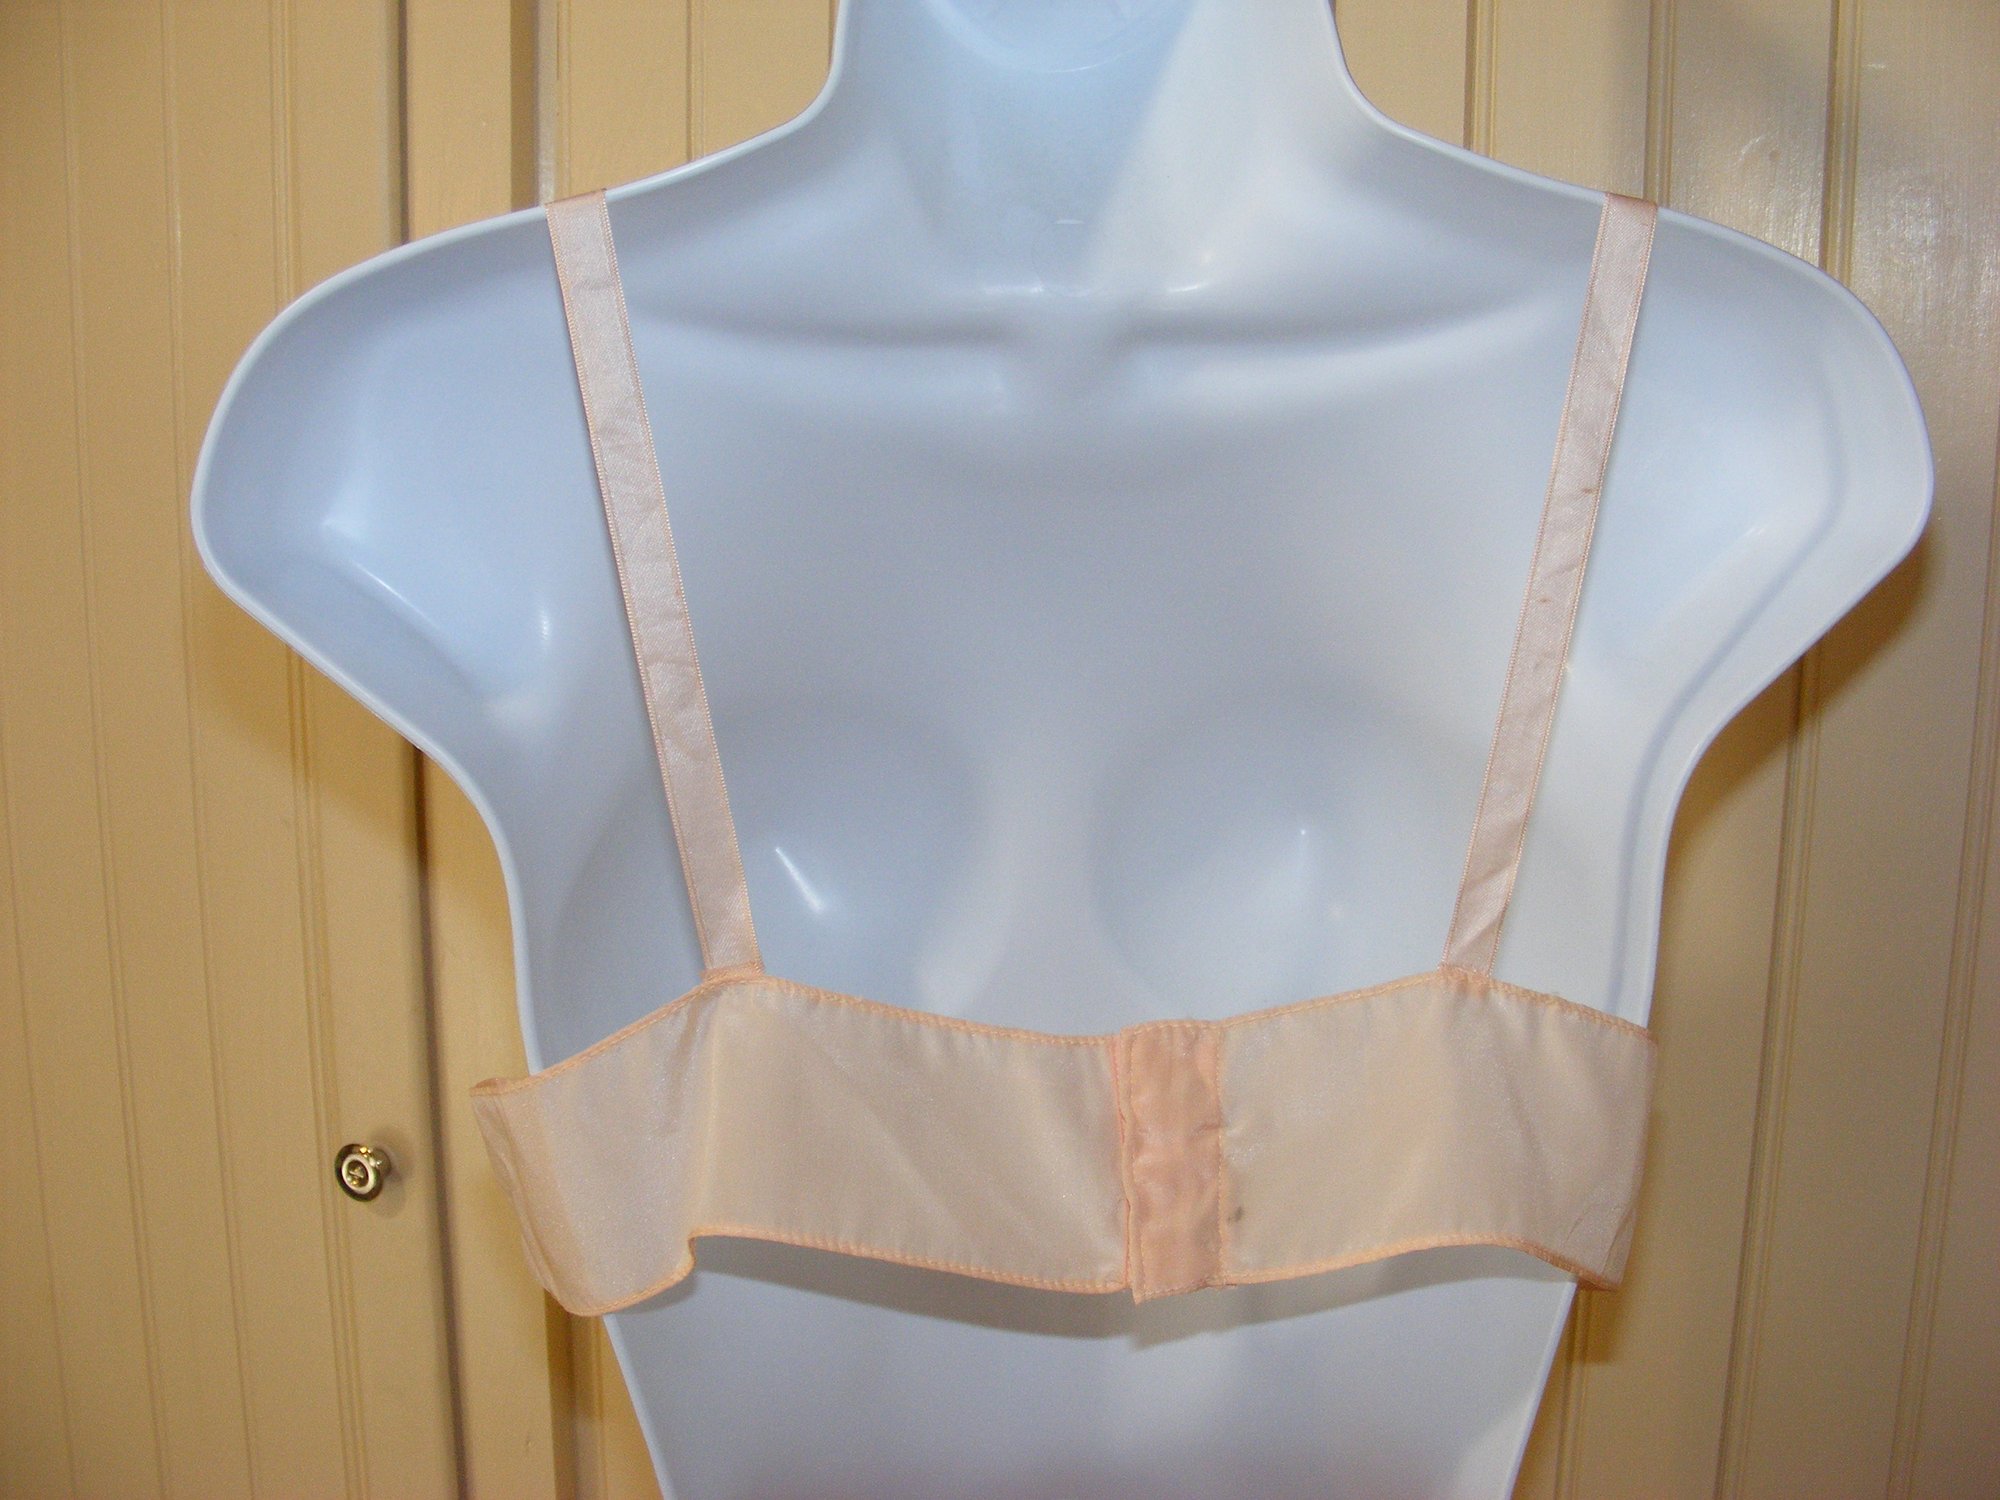 Rare 30s vintage bra French lingerie silk satin peach tones